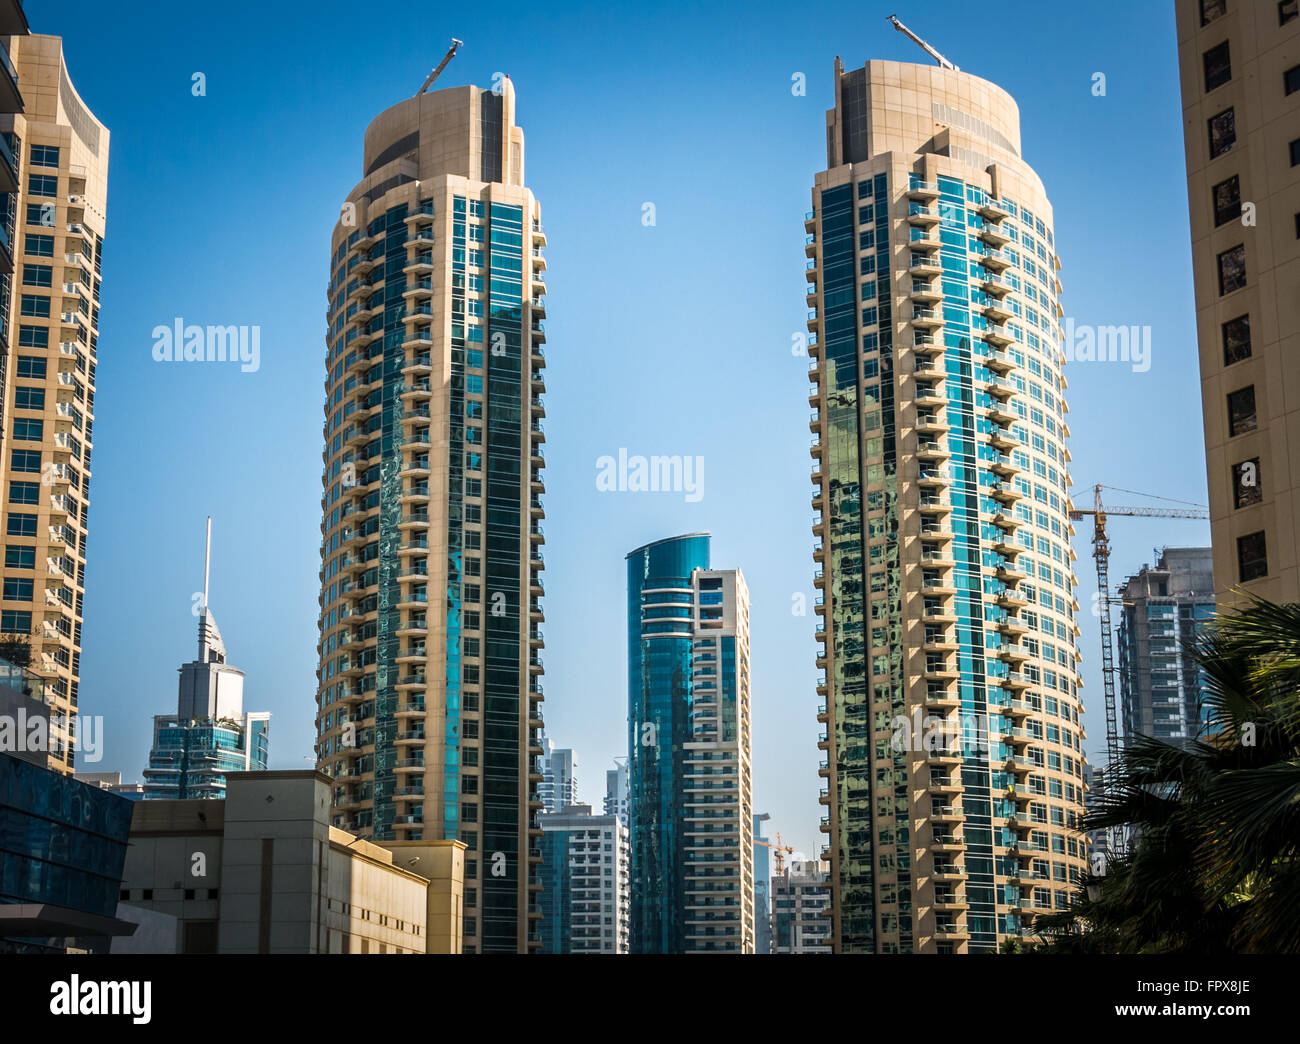 Highrise buildings in the Marina district of Dubai, United Arab Emirates Stock Photo